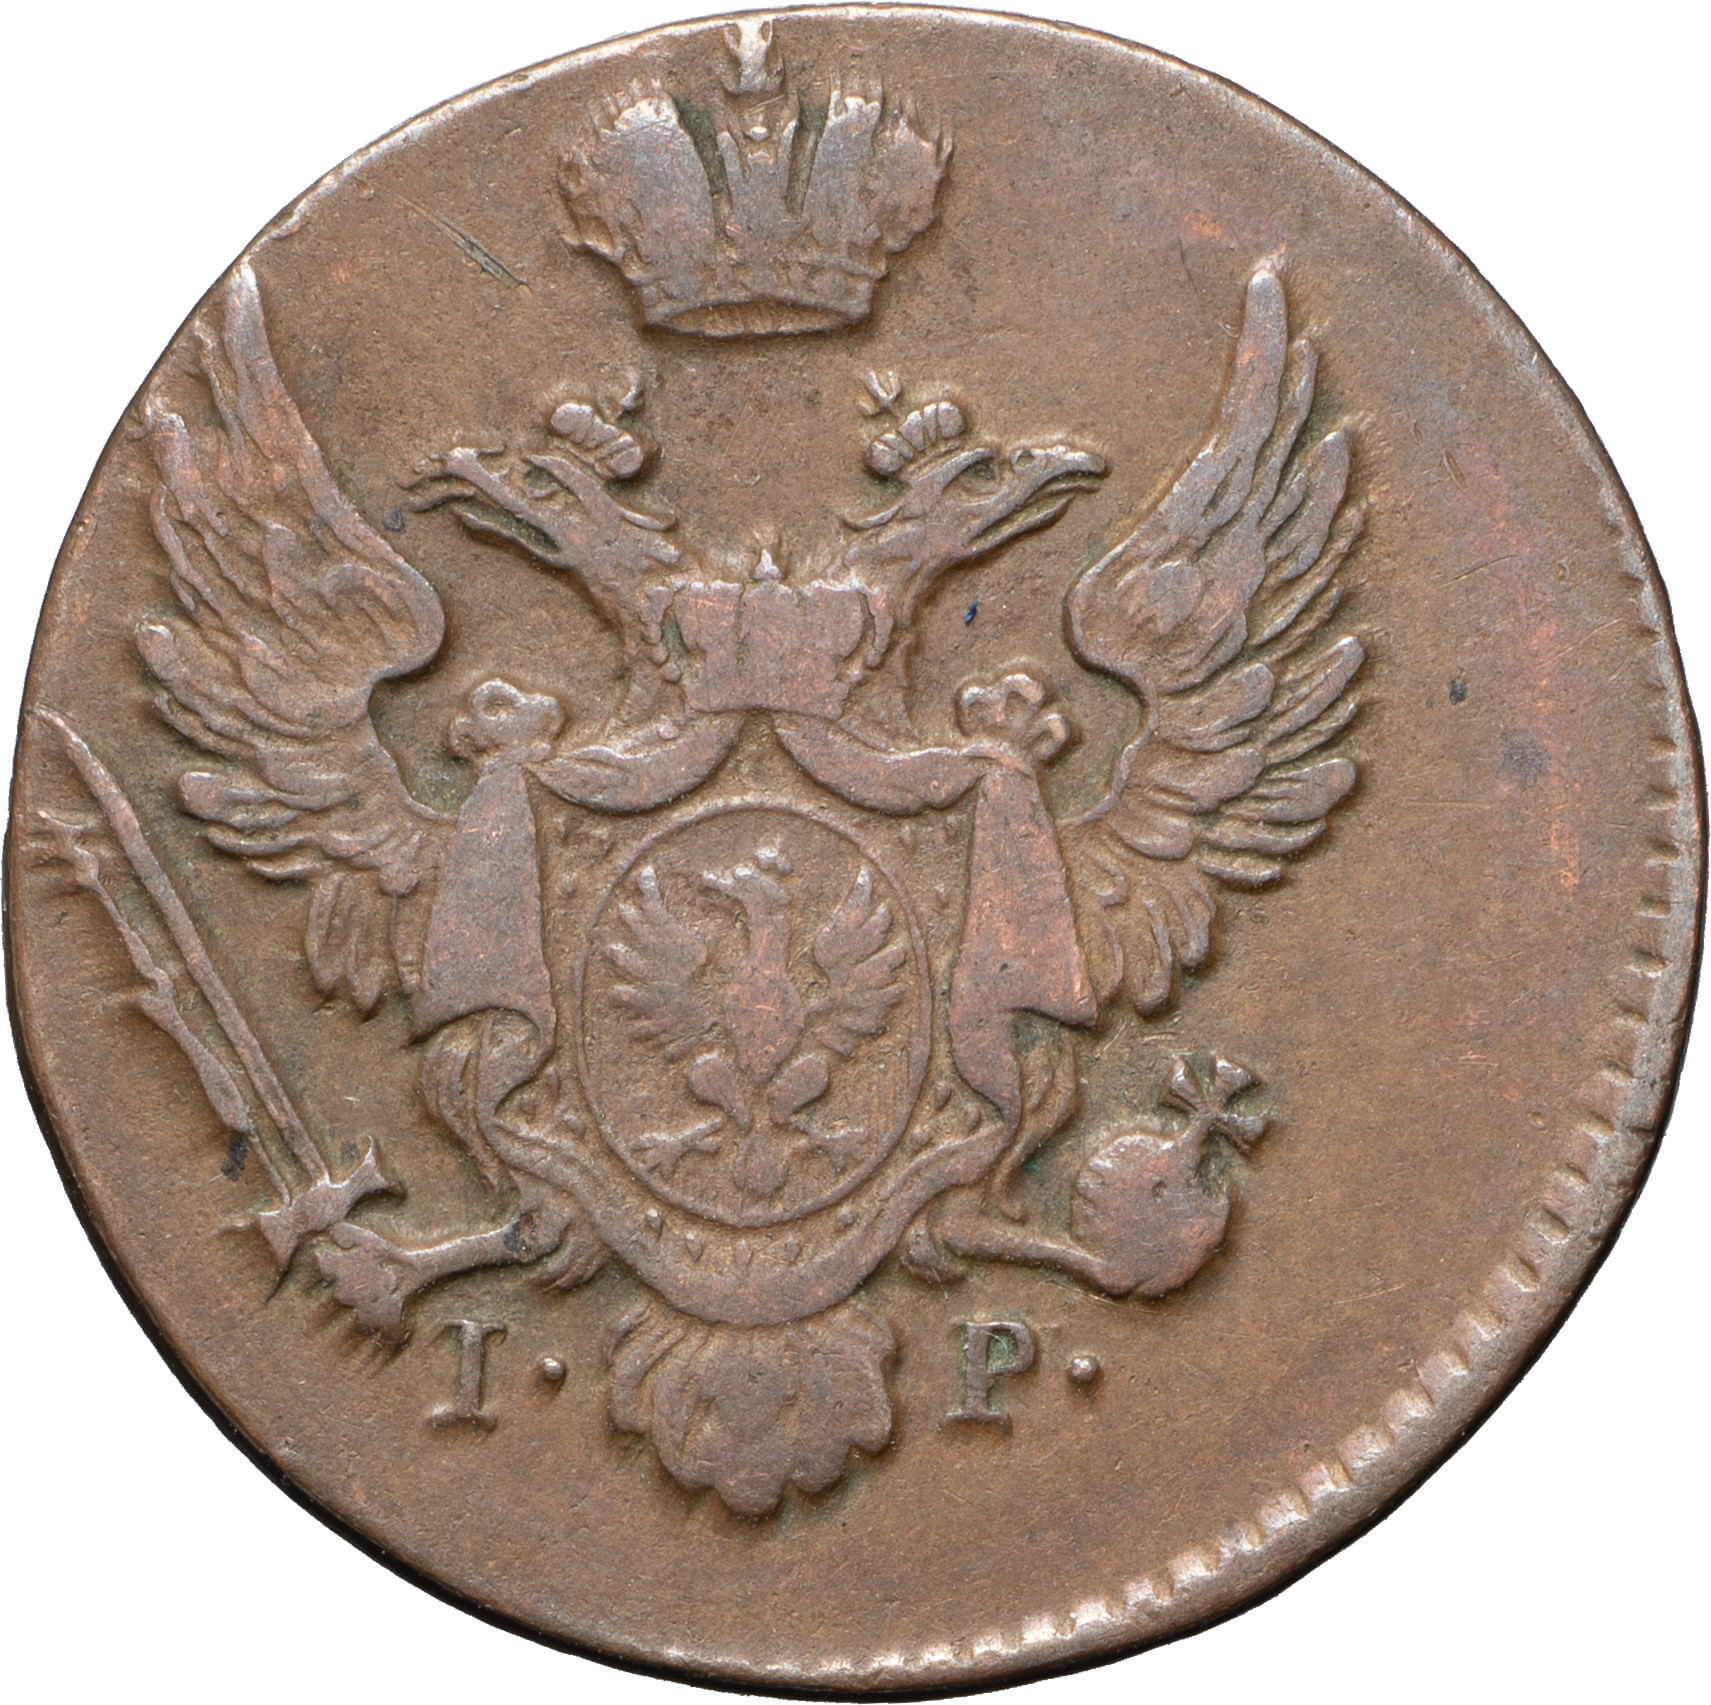 1 грош 1835 года